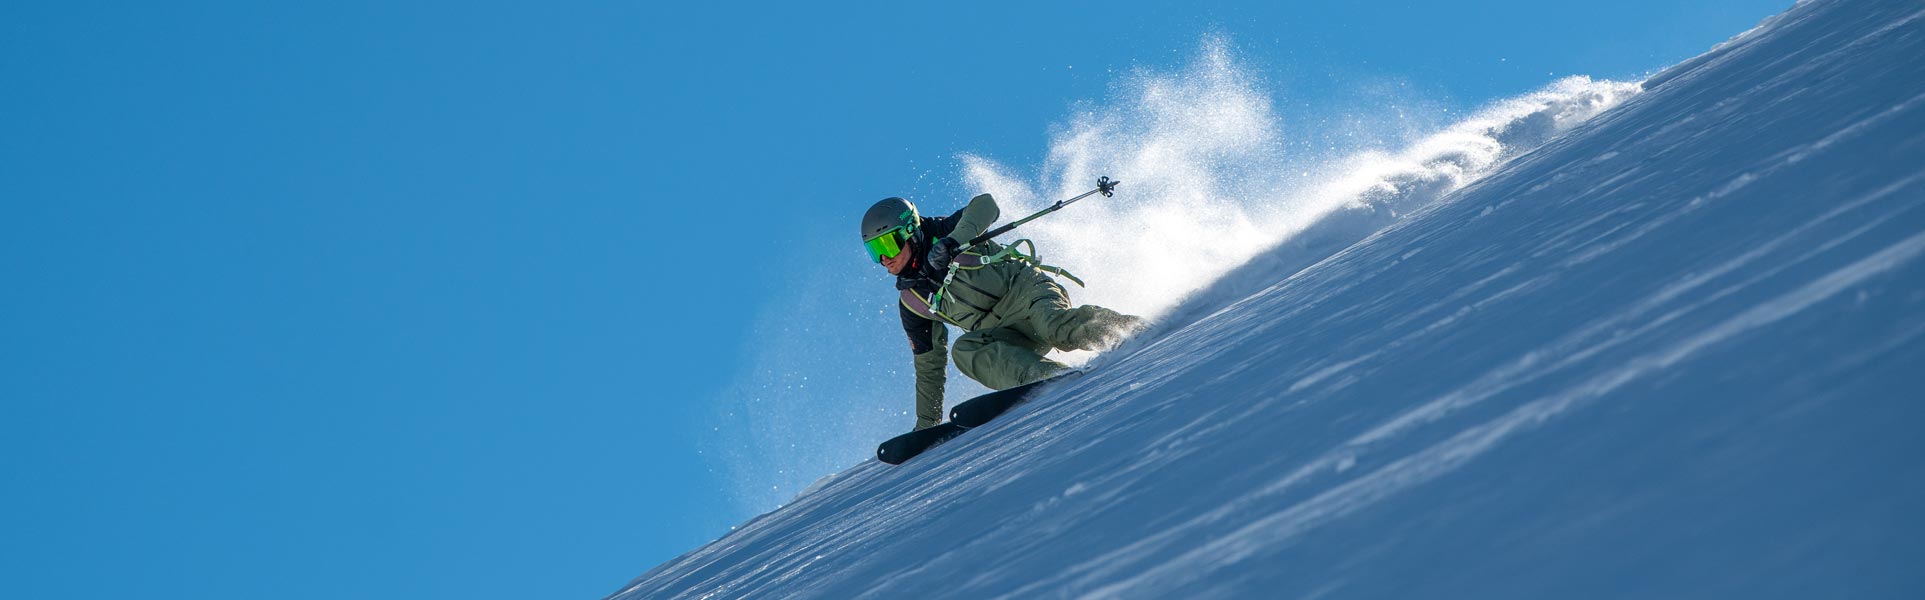 A Ski Instructor Skiing off-piste in his ski lesson